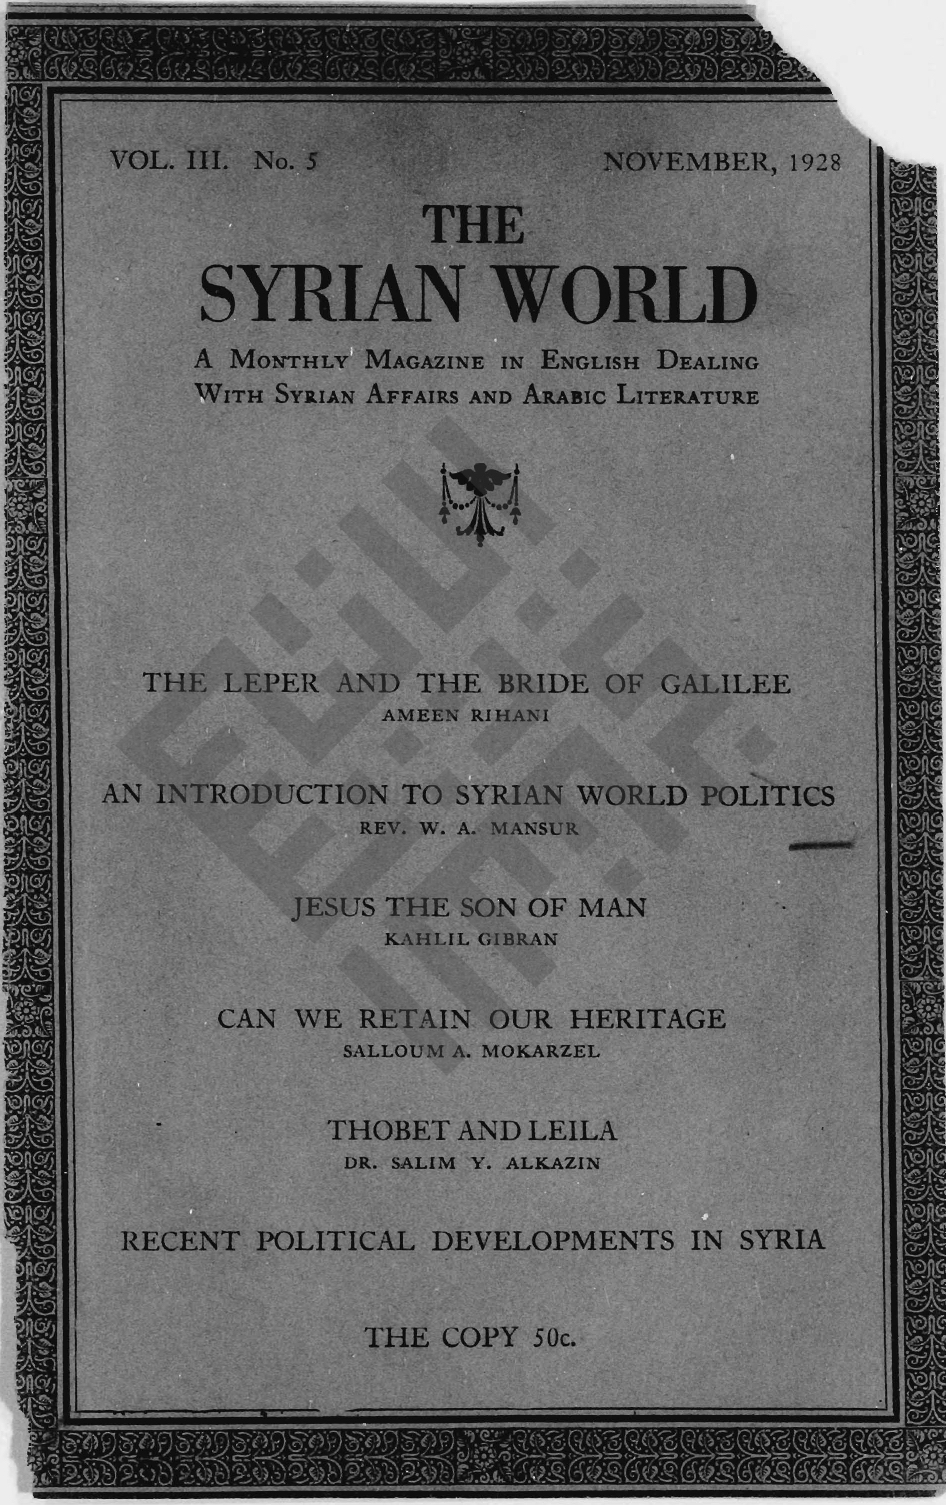 A Man from Lebanon Nineteen Centuries Afterward, The Syrian World, 3, 5, November 1928, 21–26